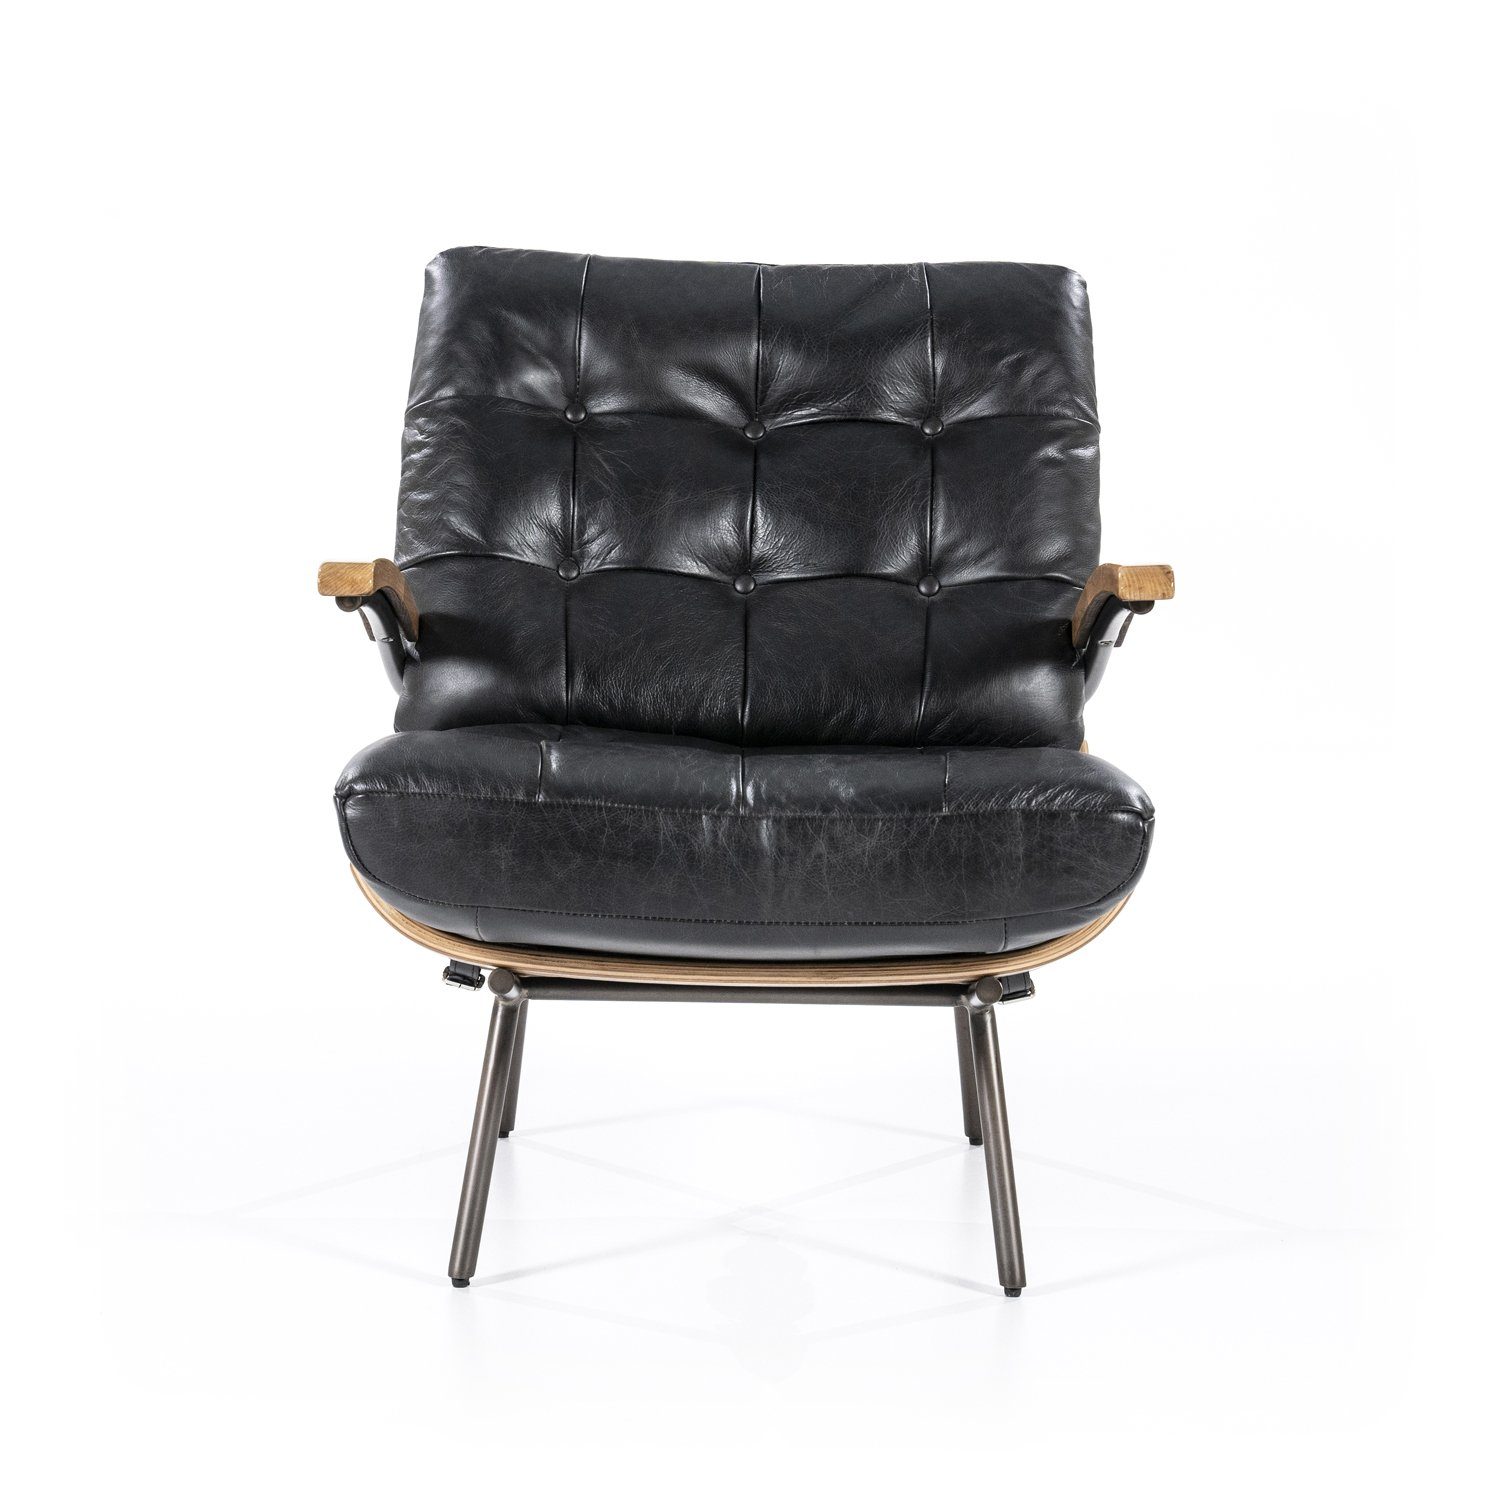 Maison ESTO schwarz Sessel Leder Vintage, Java-Leder aus hochwertigem Ledersessel Loungesessel NICOLAS